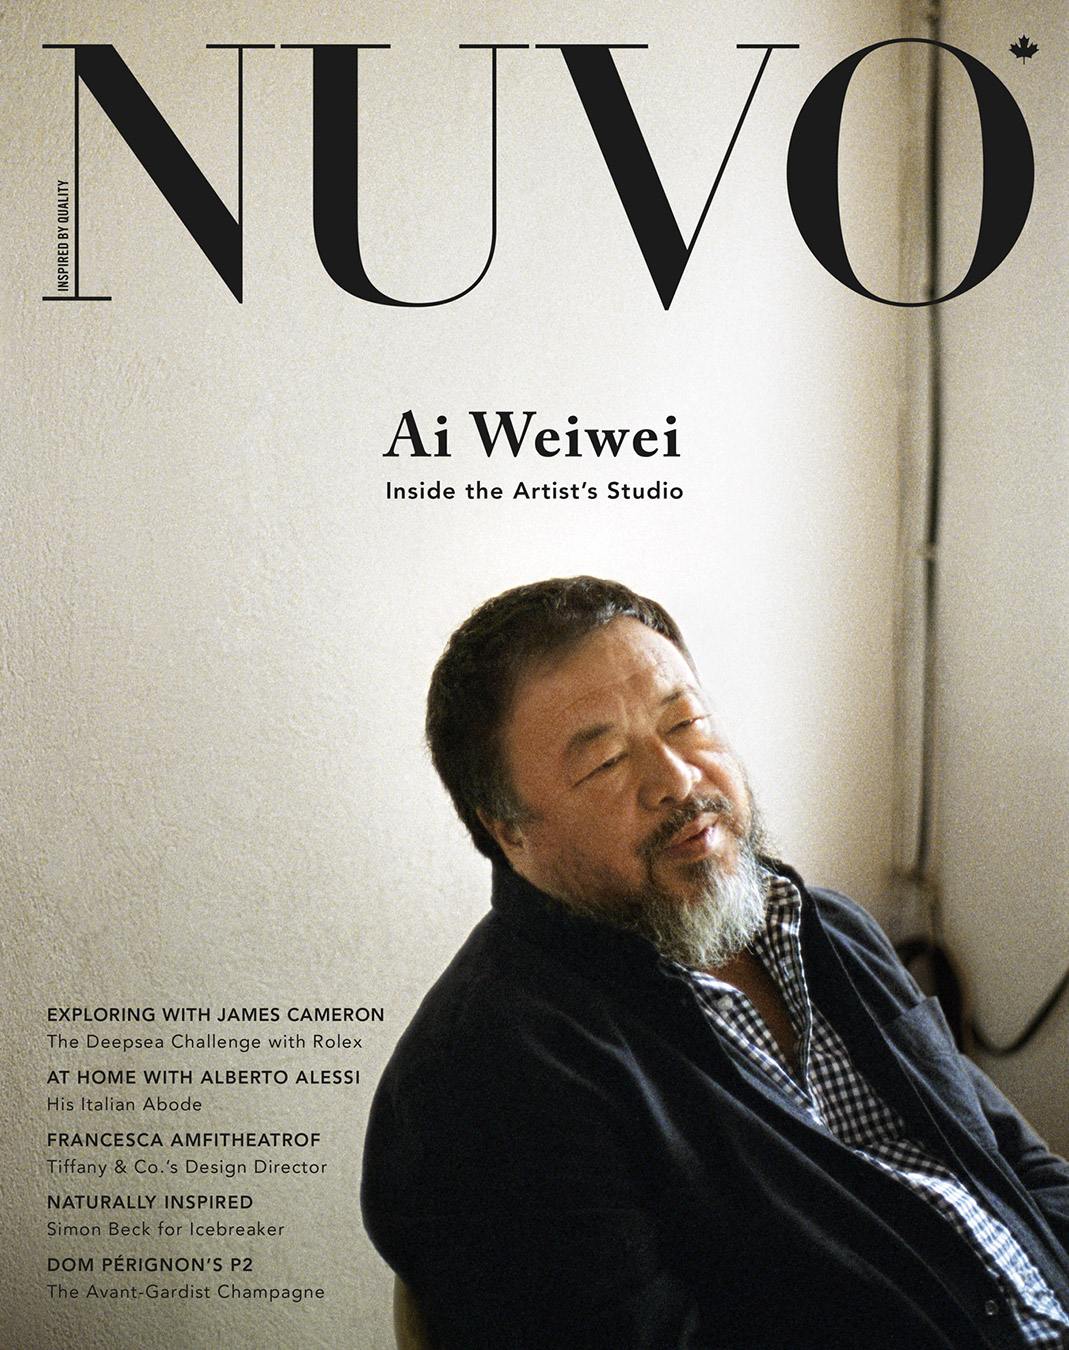 NUVO Winter 2014 Cover featuring Ai Weiwei